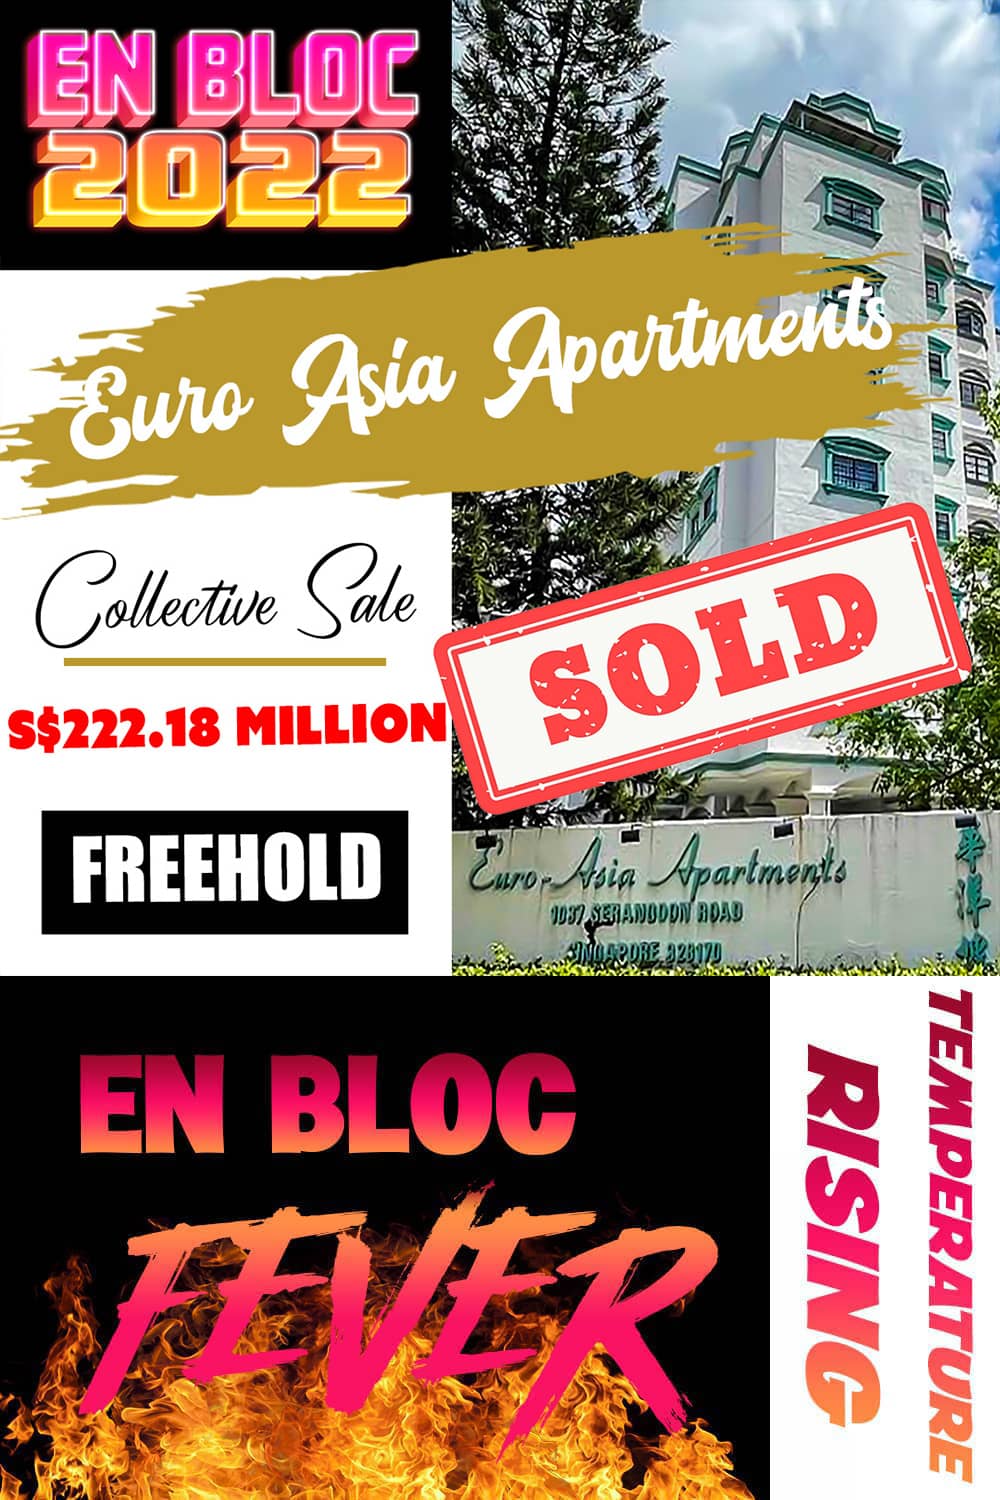 Euro-Asia Apartments Sold En Bloc Pinterest